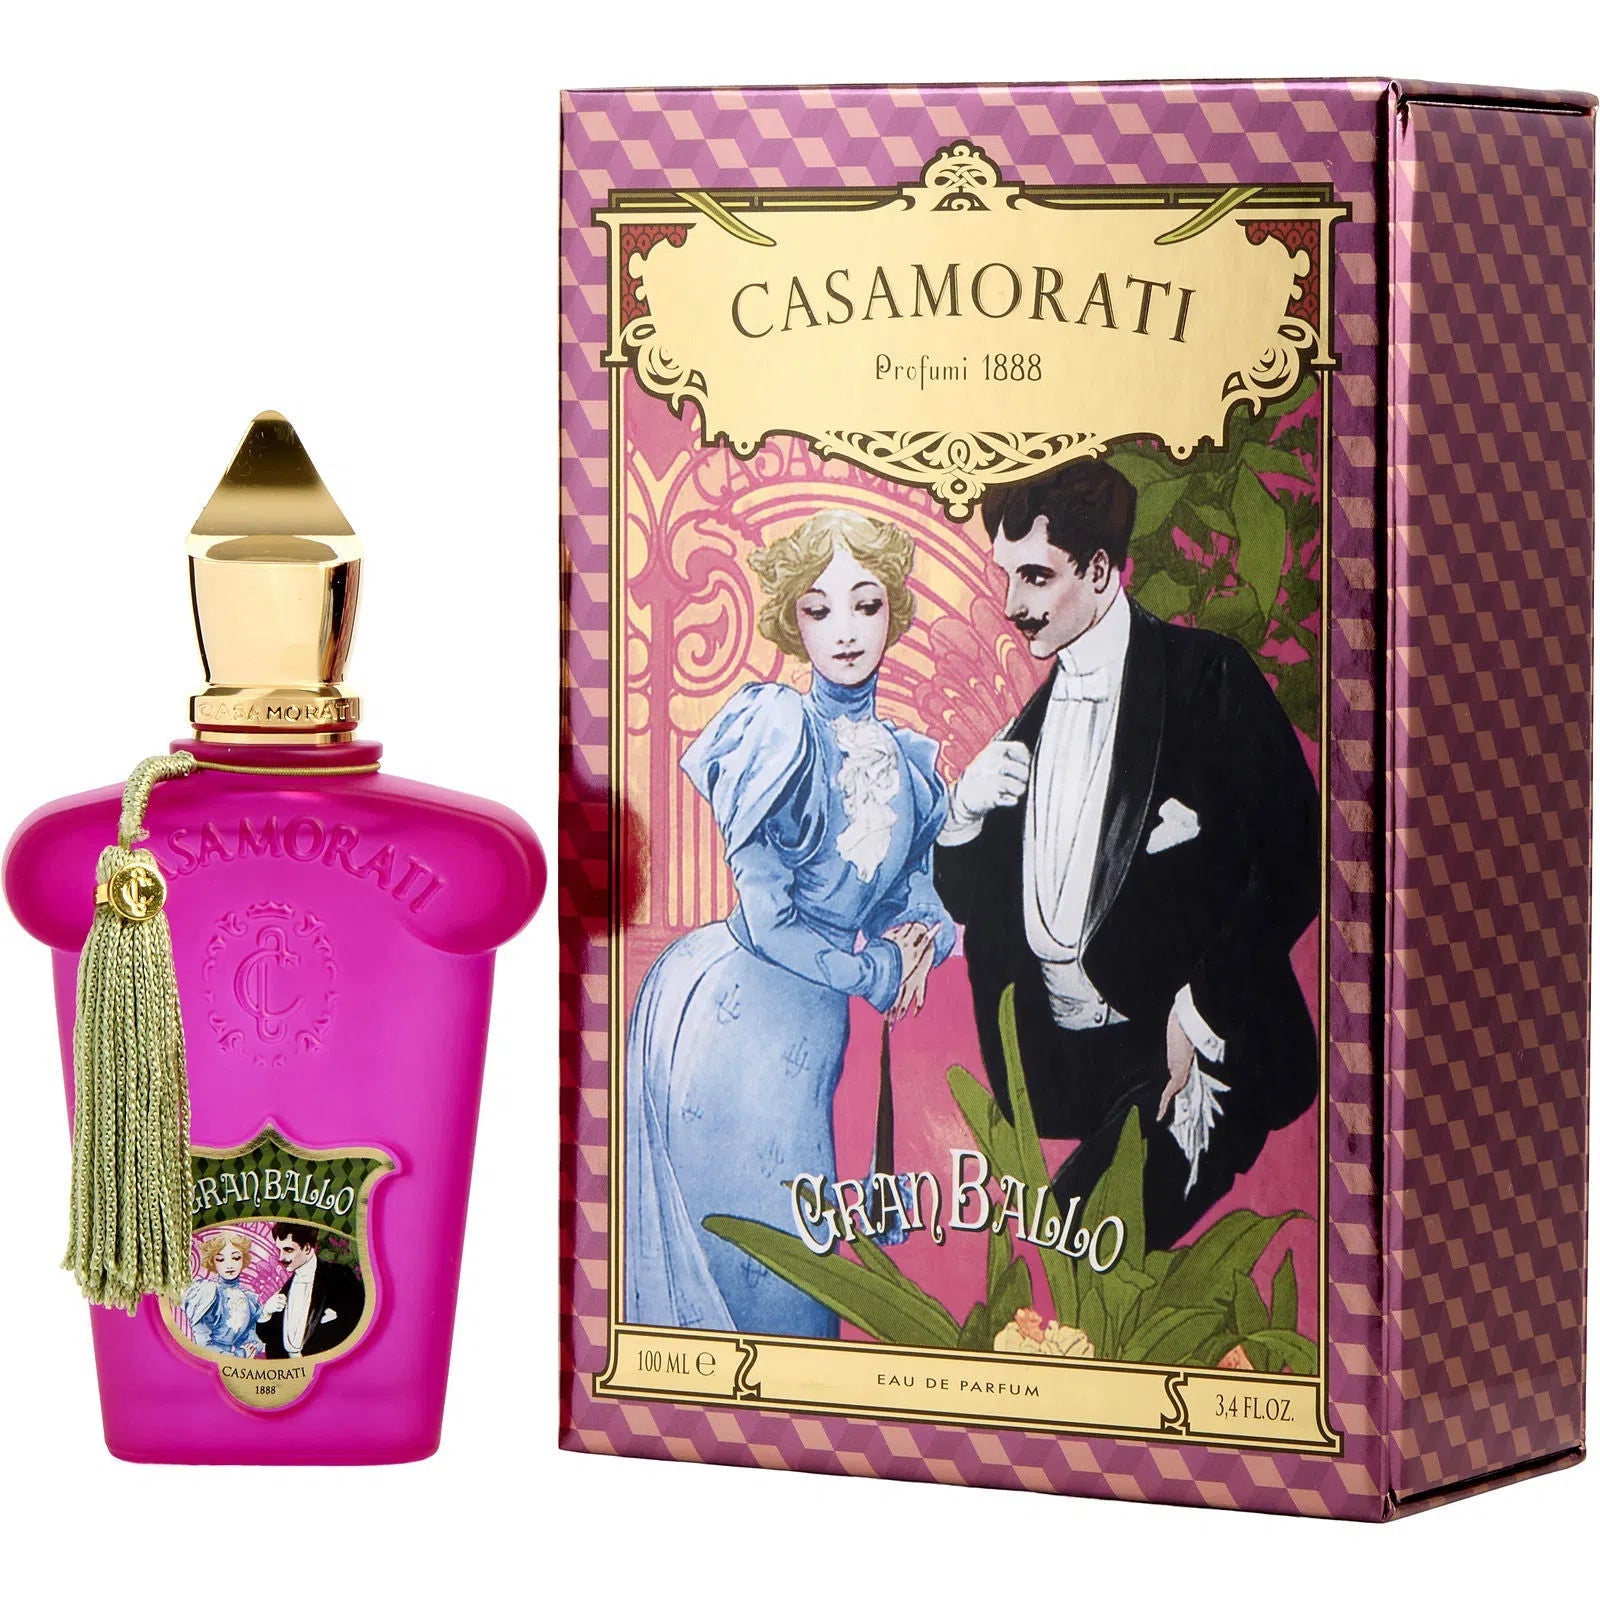 Perfume Xerjoff Casamorati Gran Ballo EDP (W) / 100 ml - 8033488153281- Prive Perfumes Honduras